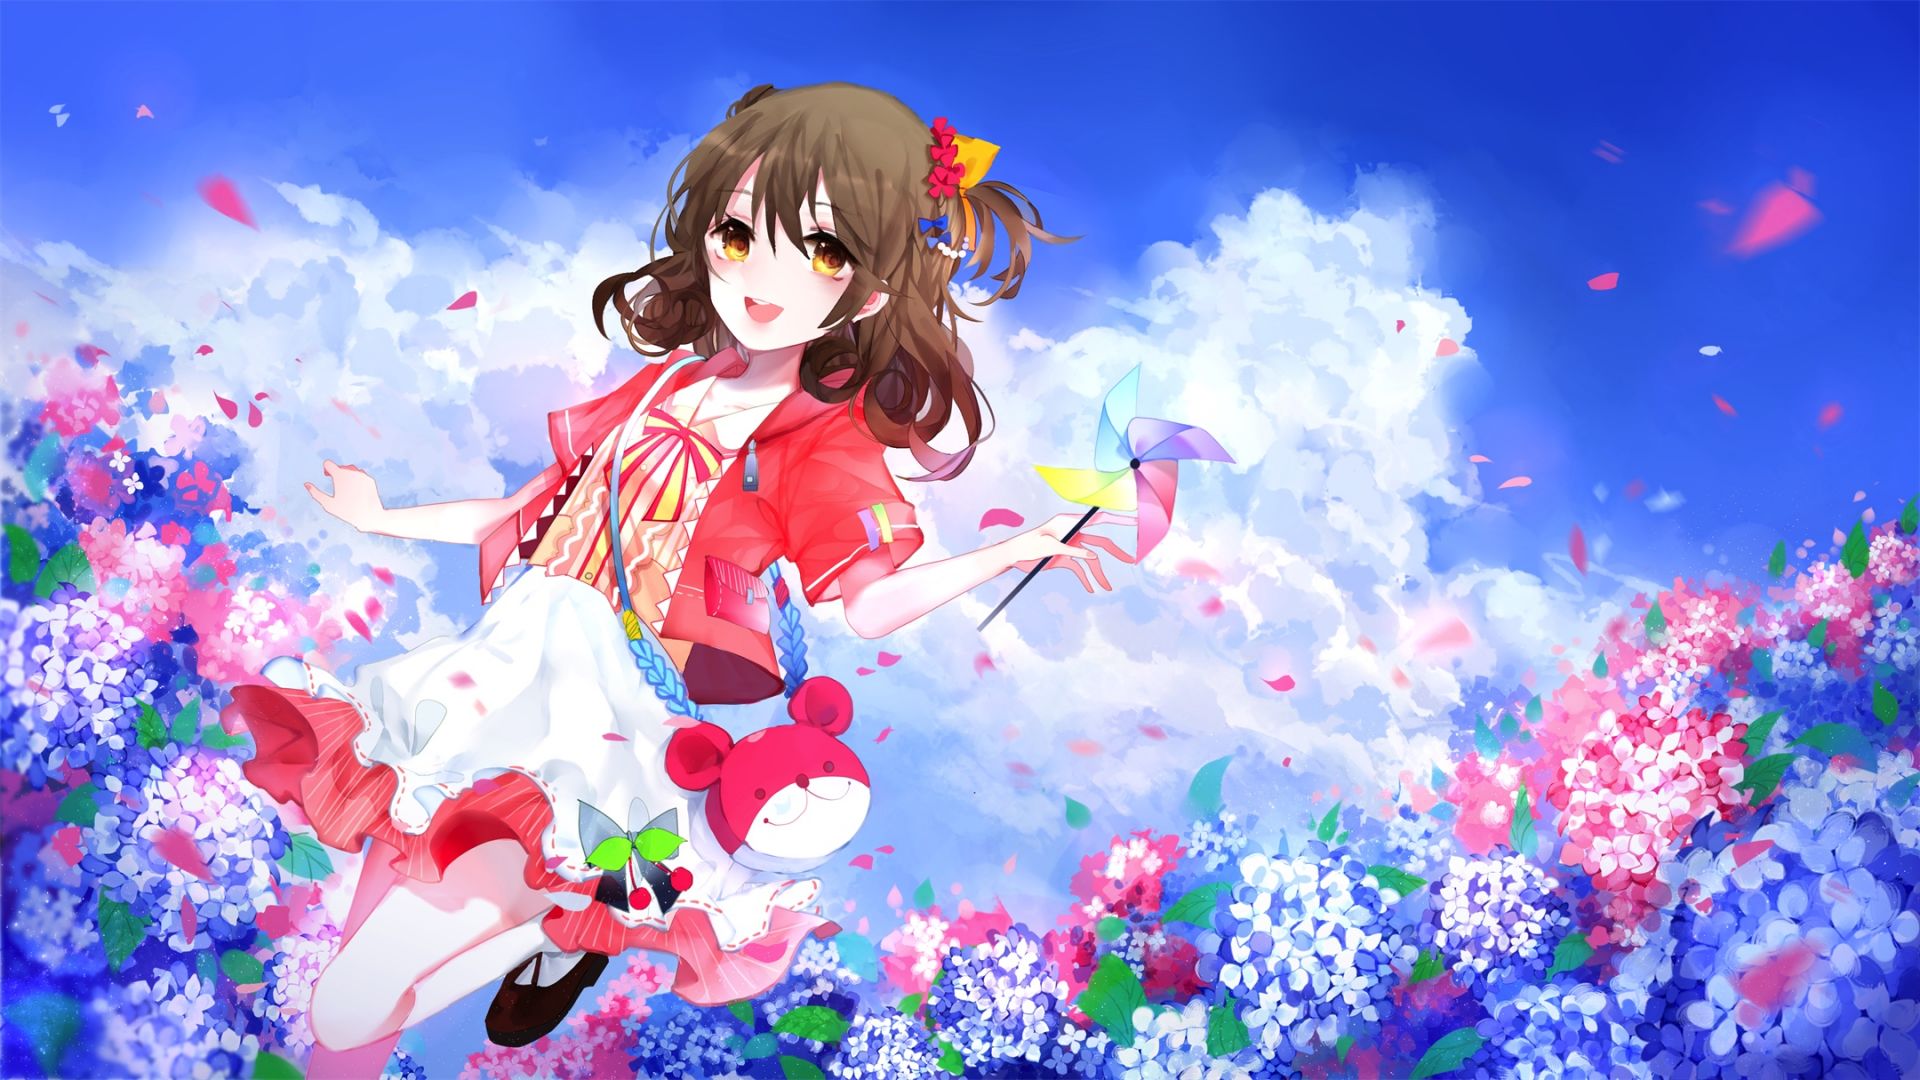 Wallpaper Original, anime girl, play, blossom, garden